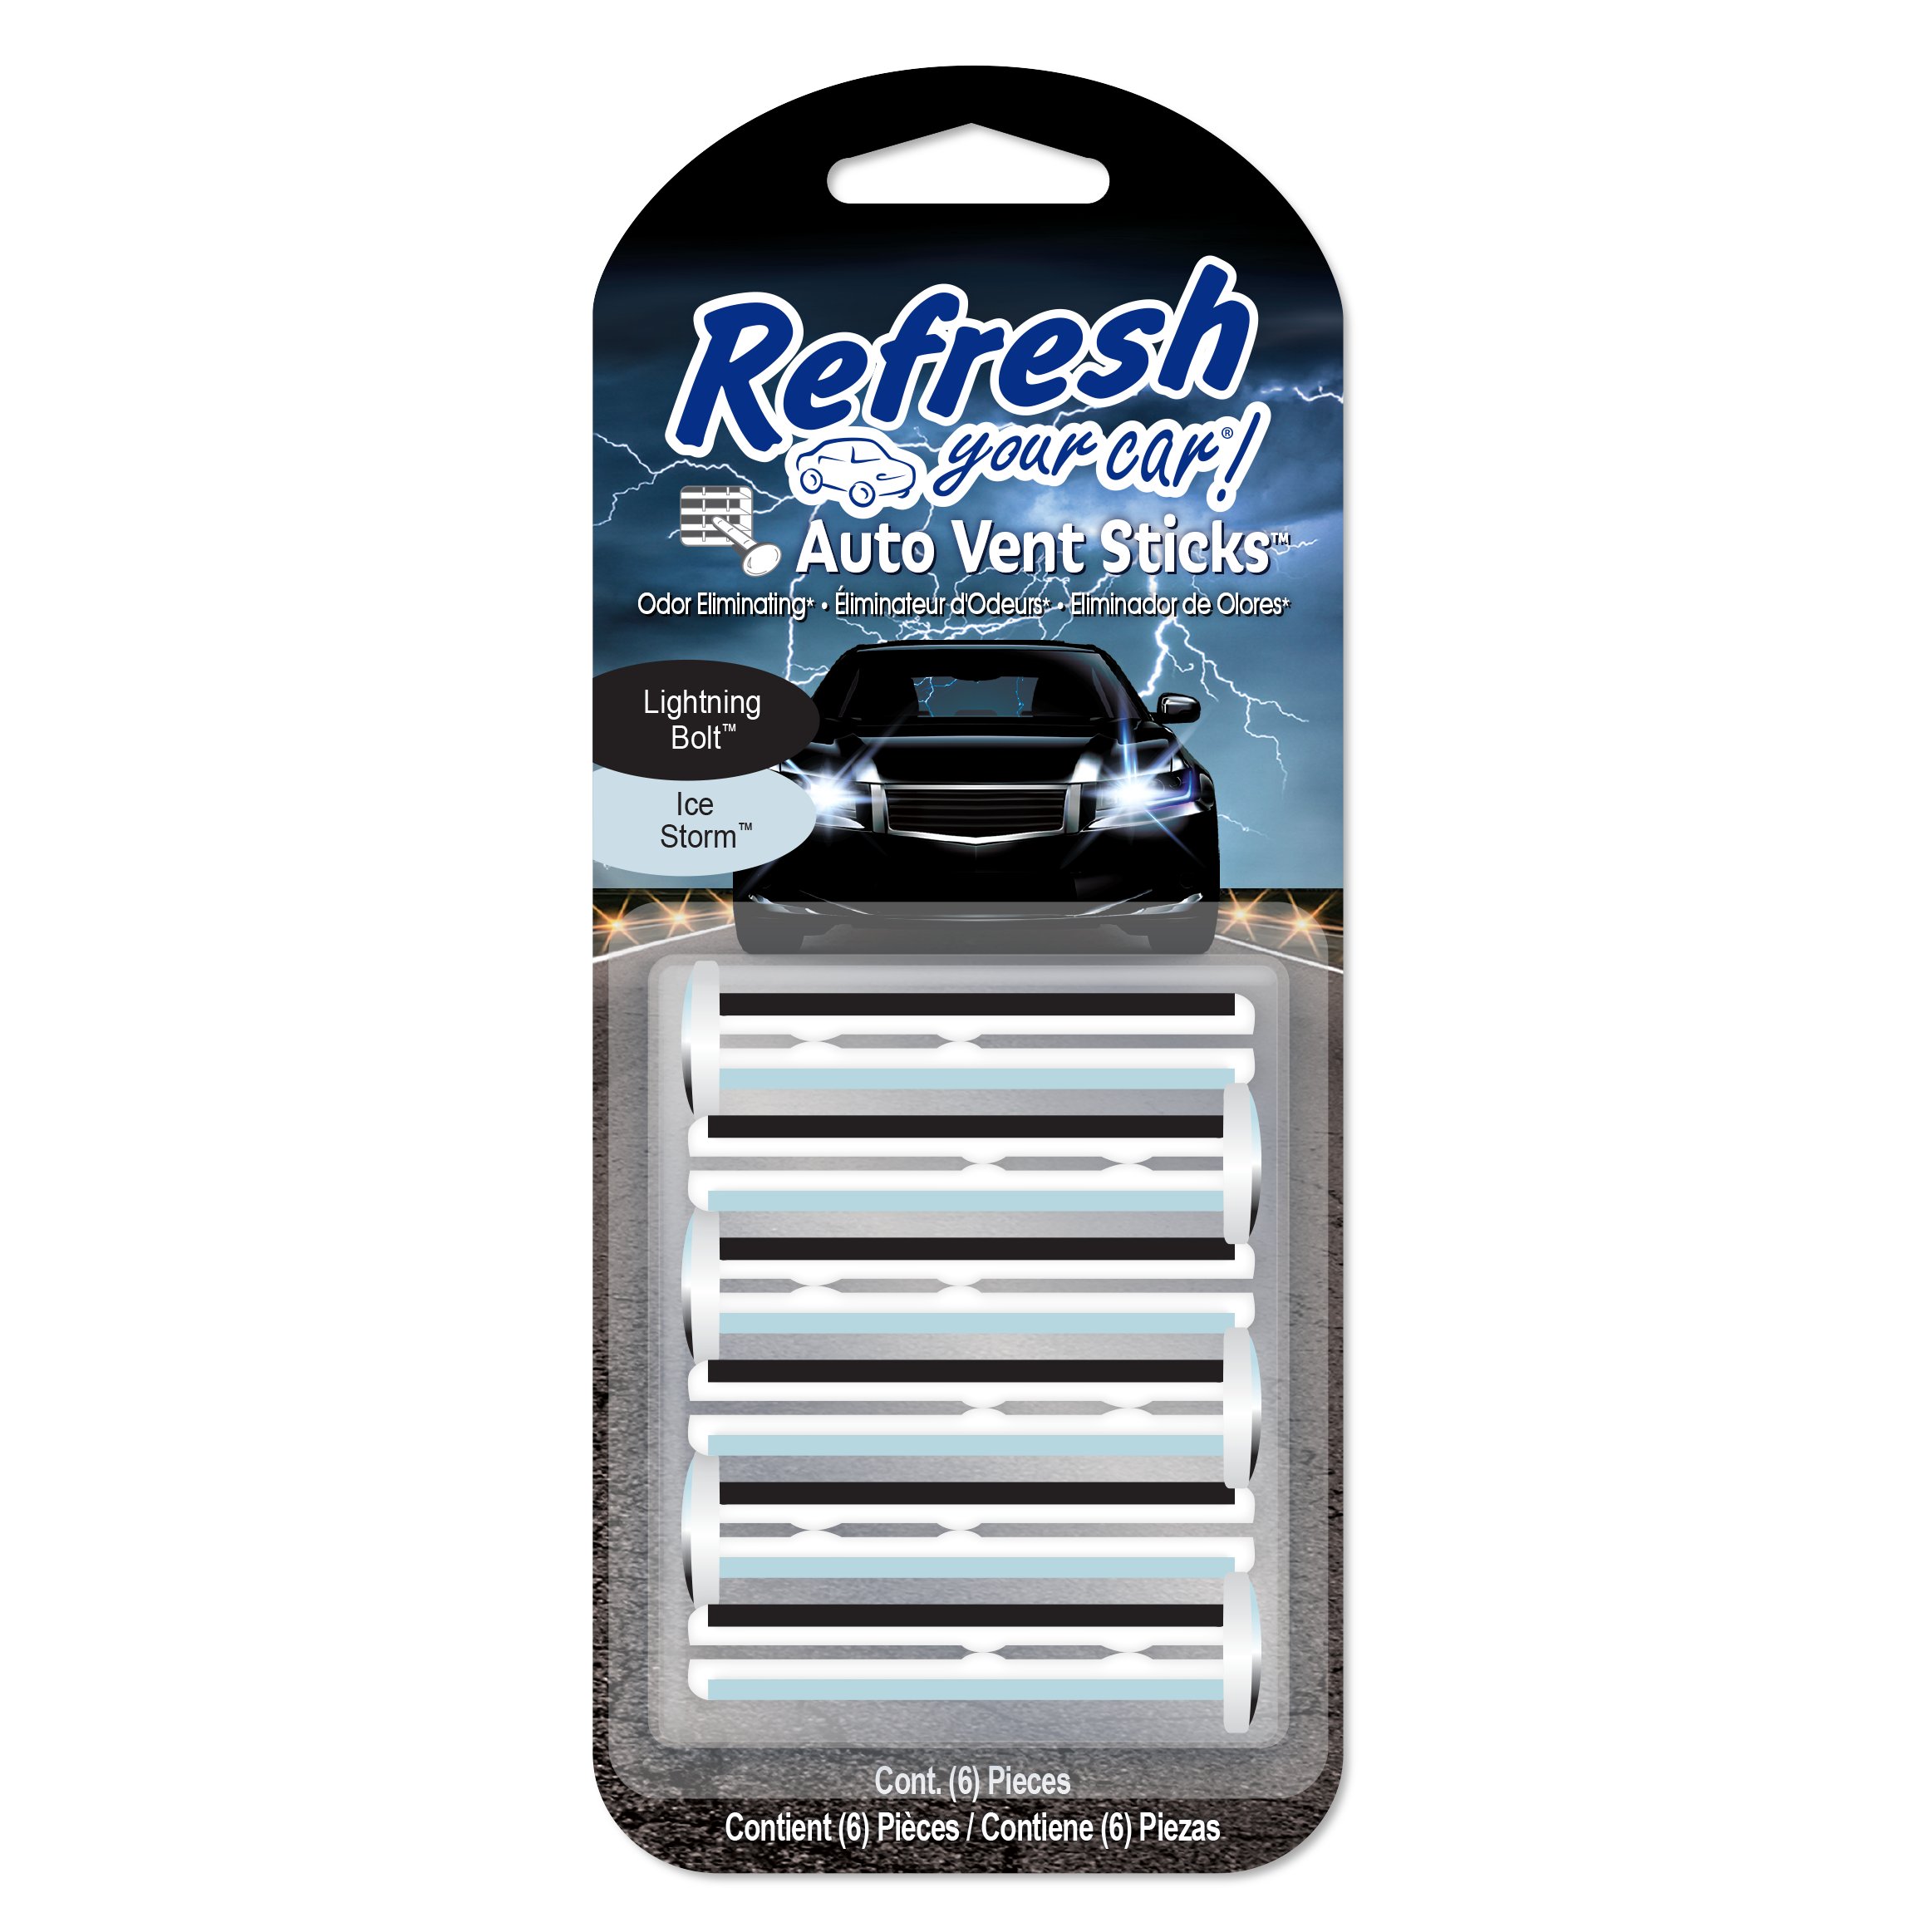 Refresh Your Car! Vent Sticks Lightning Bolt - Shop Car Accessories at H-E-B